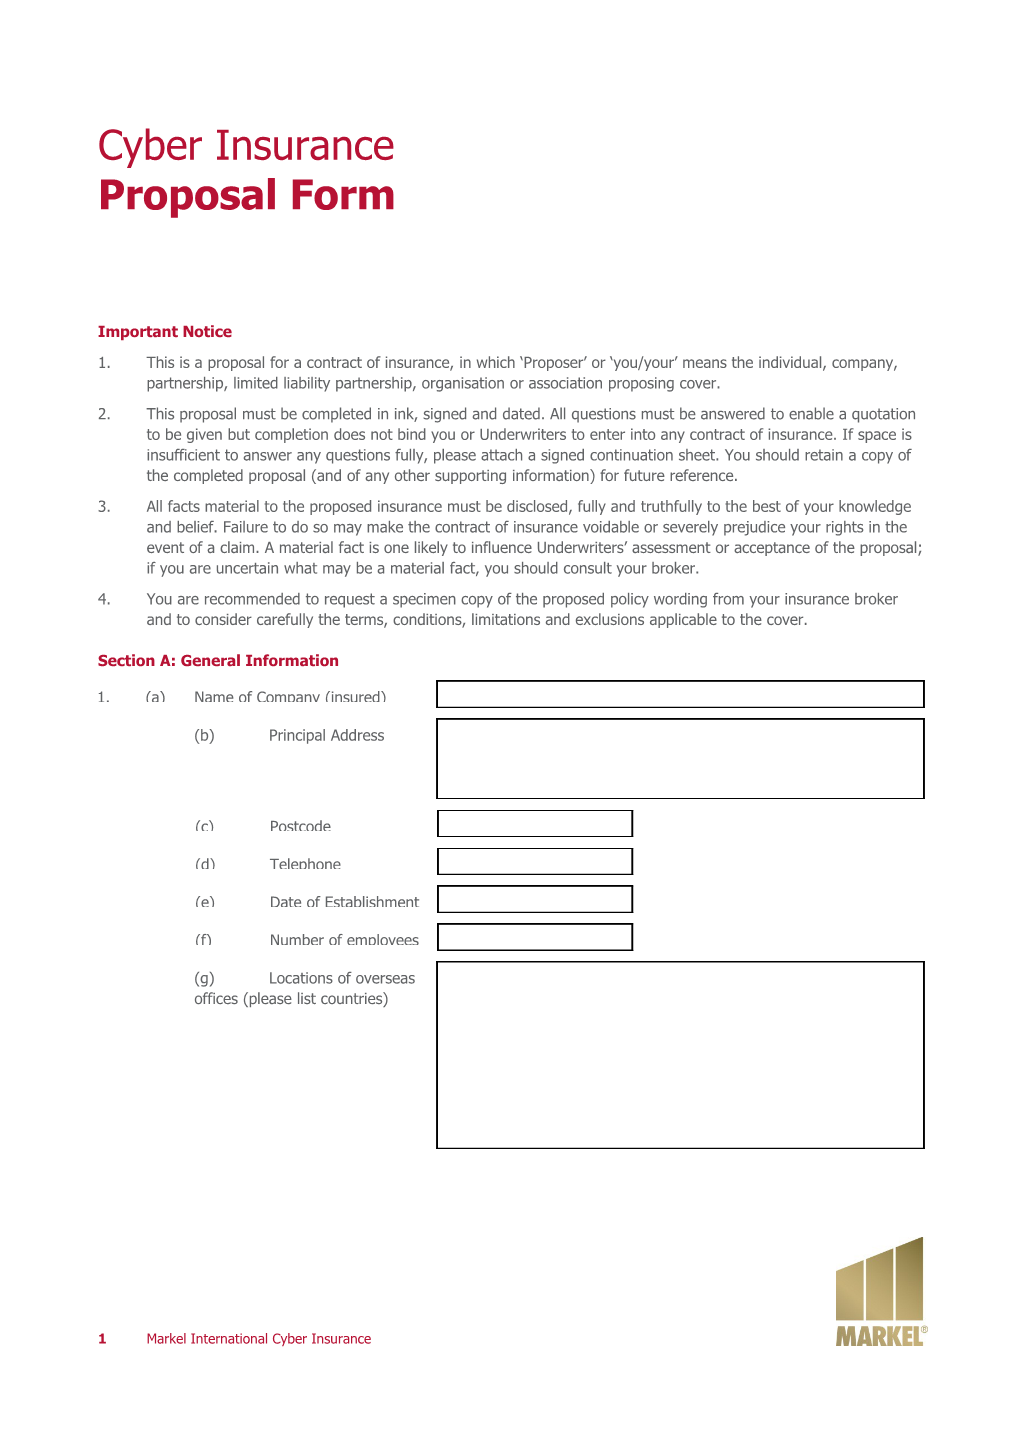 Cyber Insurance Proposal Form